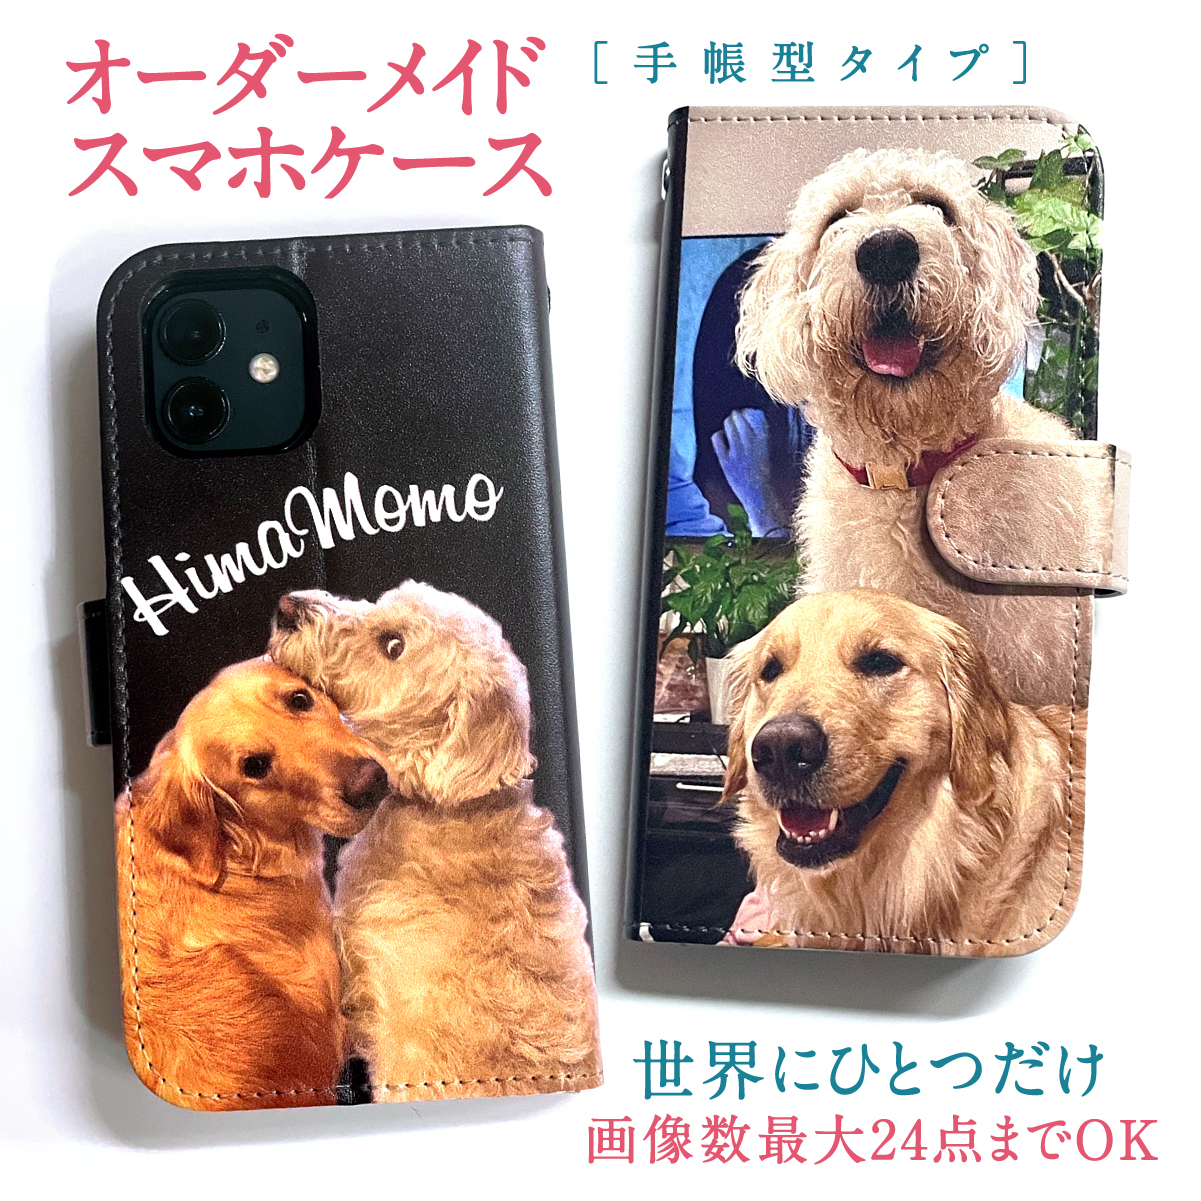 【NEW新品】スマホ手帳型ケース(受注生産オーダーページ) iPhoneケース